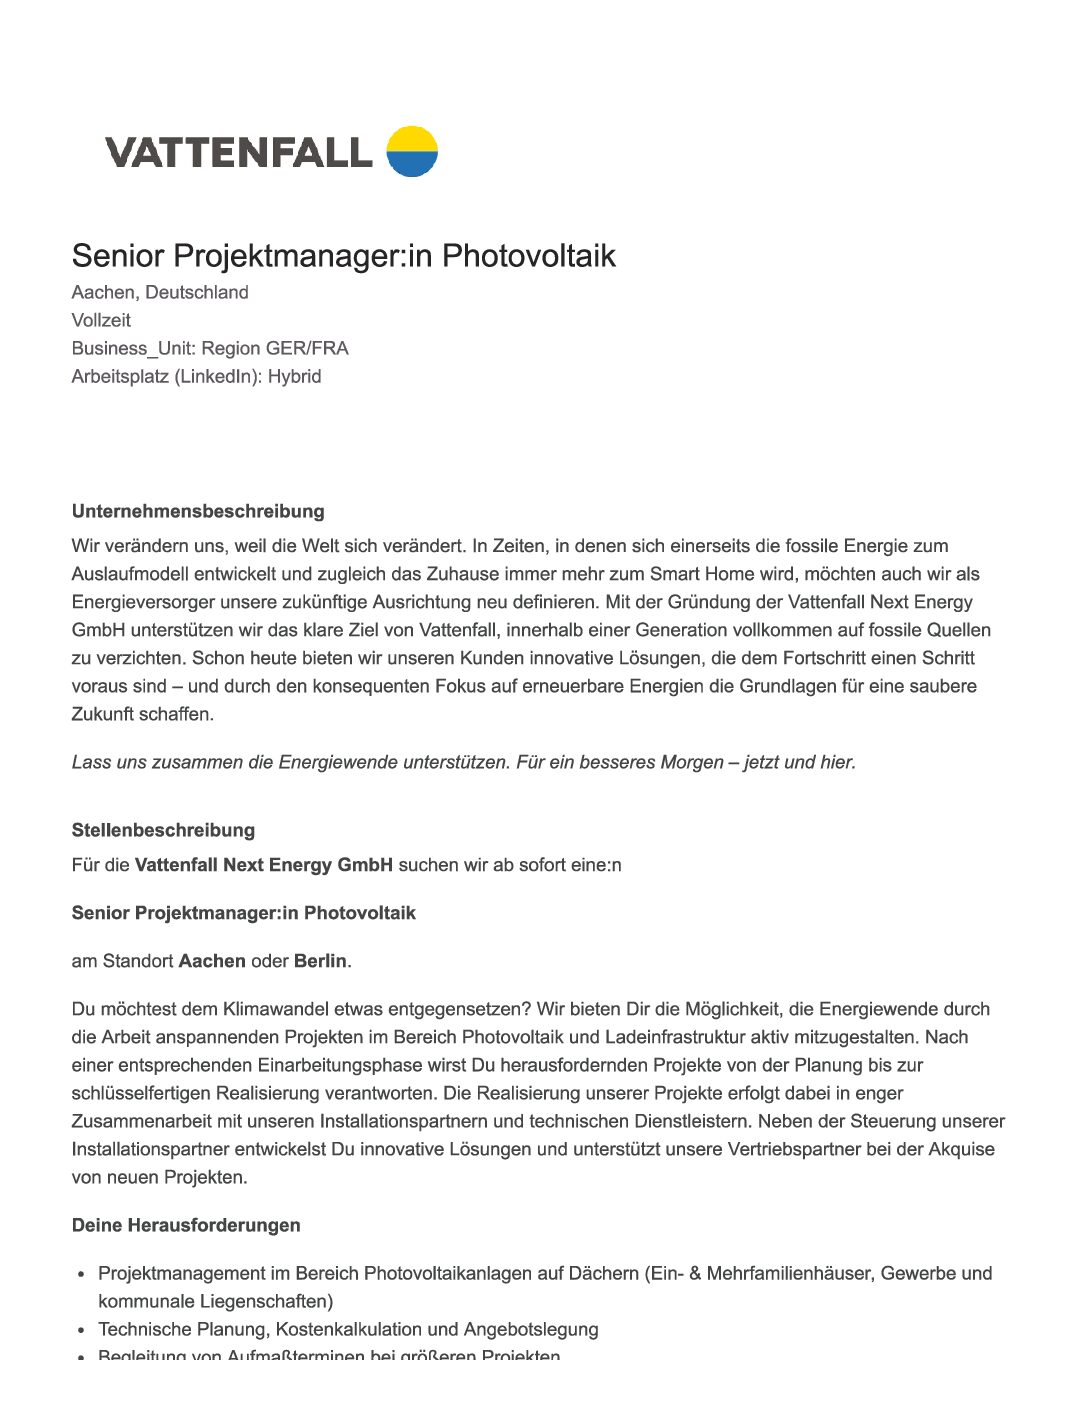 Vattenfall_Senior-Projektmanager-Photovoltaik-4-pdf  